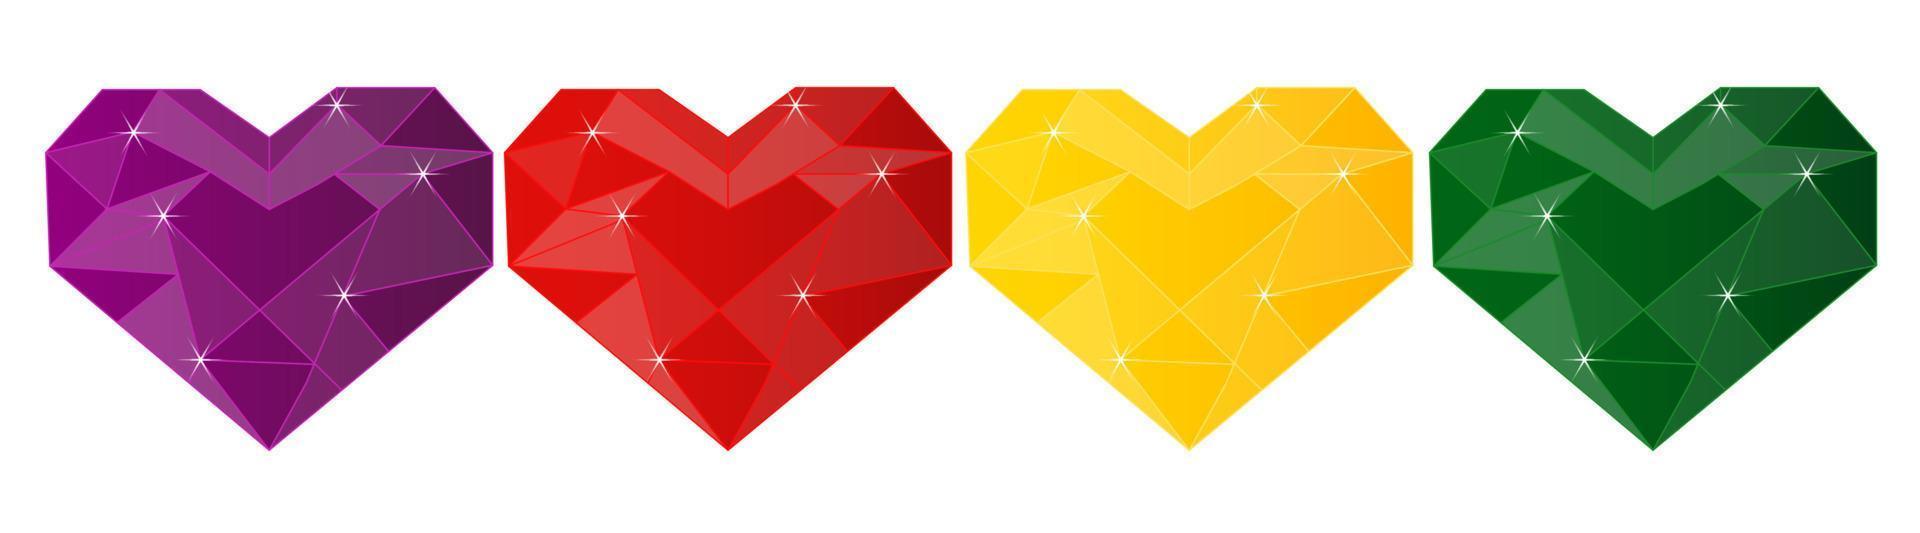 Crystal polygonal heart shape symbol, gem, shiny red ruby heart, purple amethyst, yellow golden sapphire and green emerald heart vector